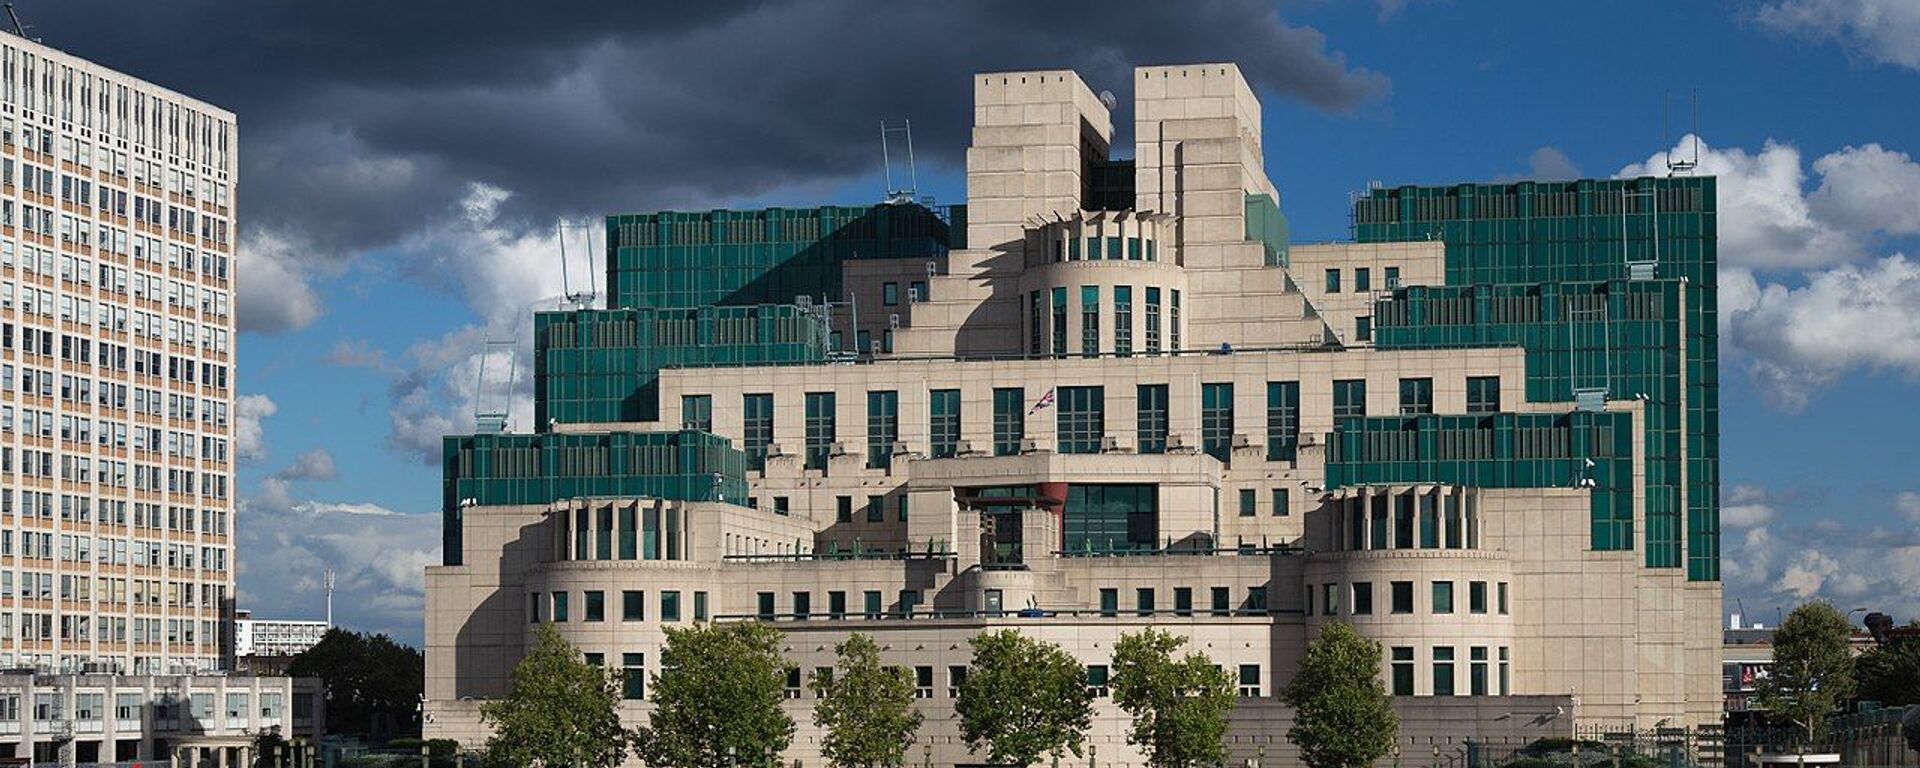 The SIS Building (or MI6 Building) at Vauxhall Cross, London, houses the headquarters of the British Secret Intelligence Service (SIS, MI6) - Sputnik International, 1920, 04.04.2022